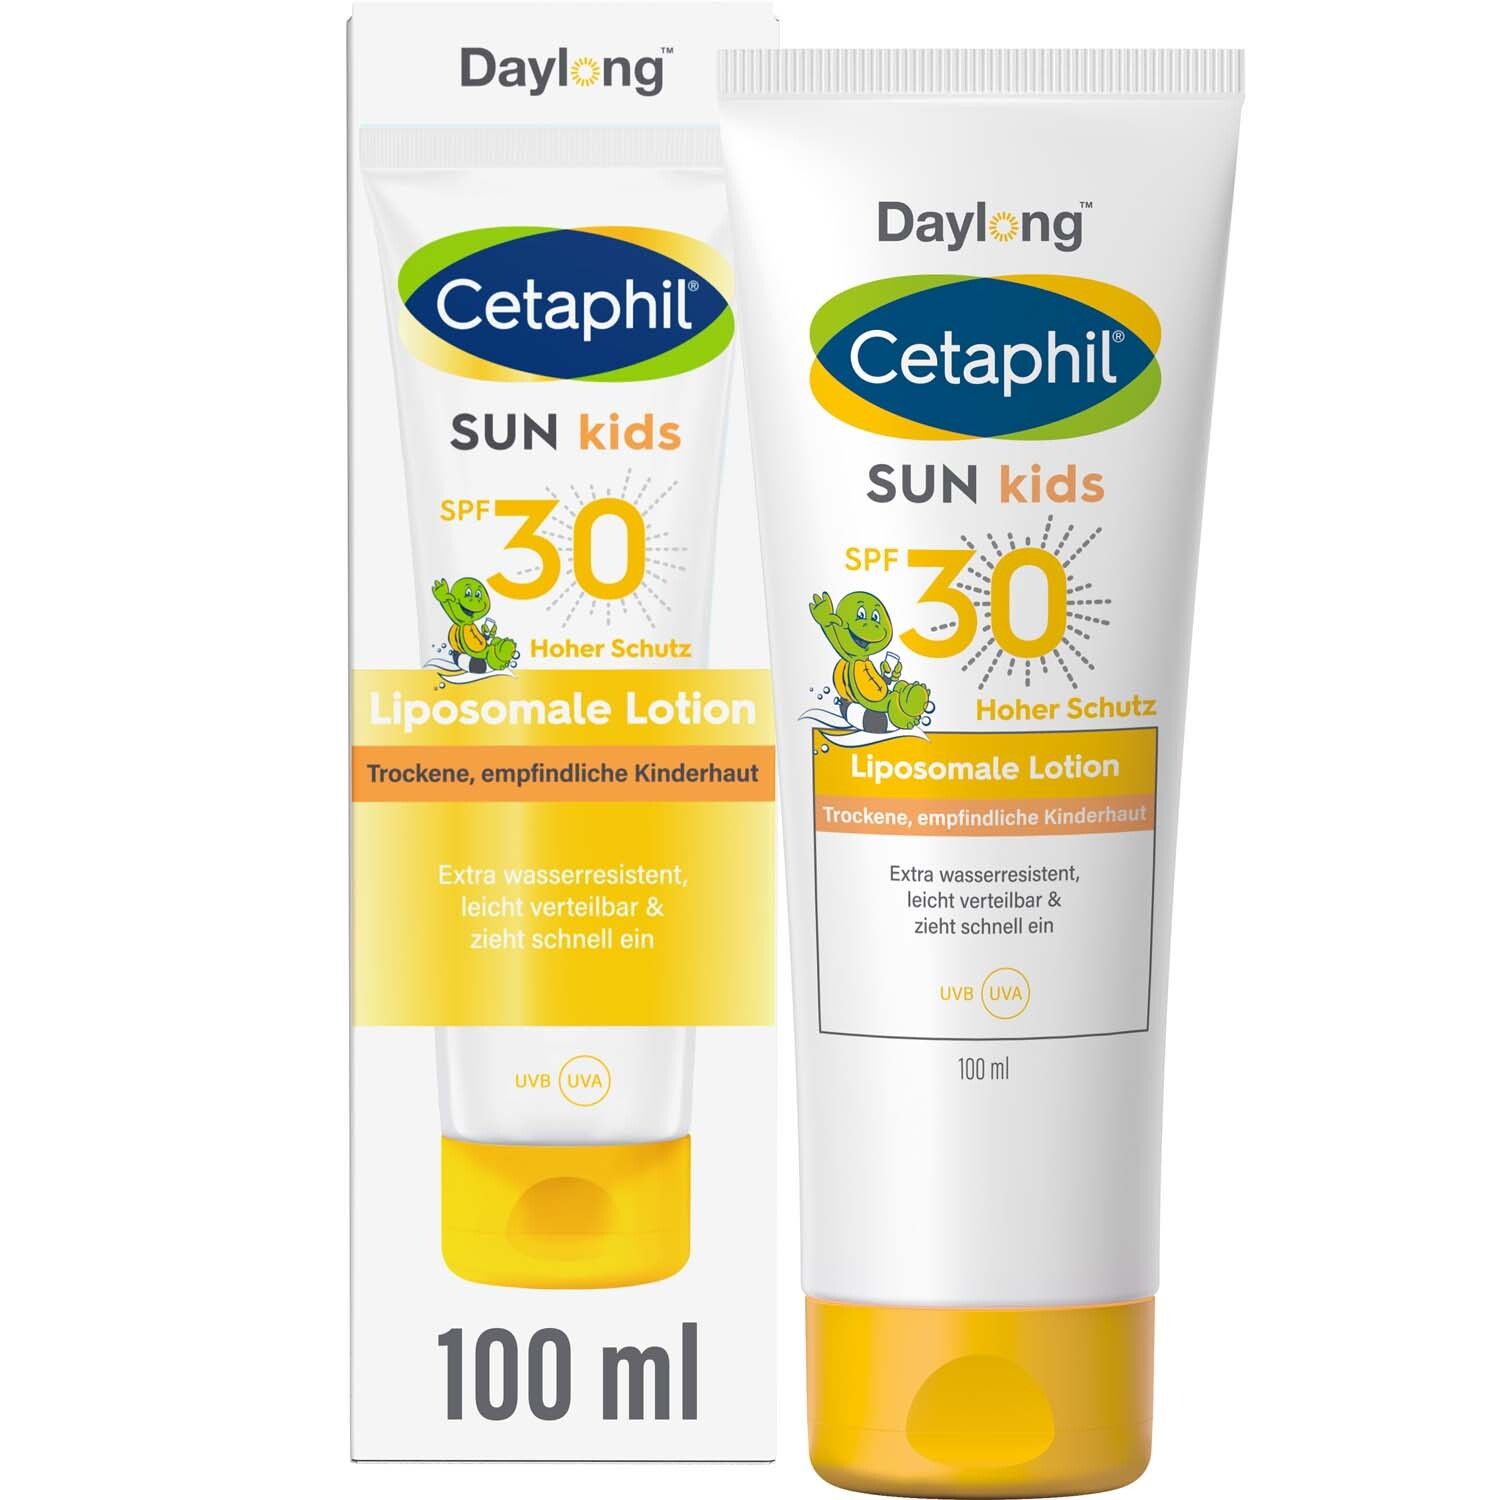 Cetaphil® Sun Daylong™ Kids SPF 30 Liposomale Lotion